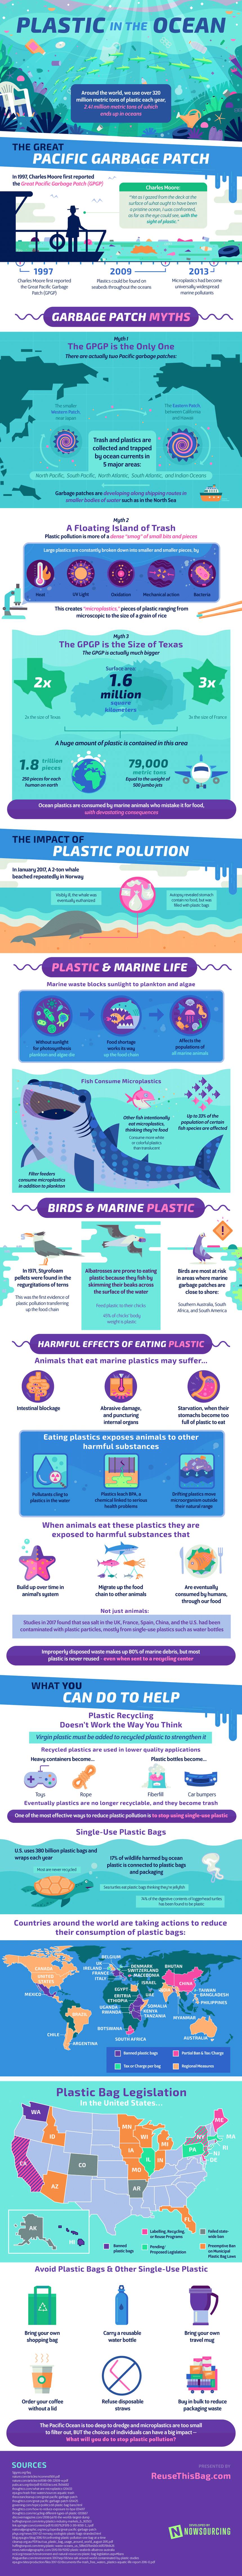 plastic waste infographic.png.860x0 q70 crop smart